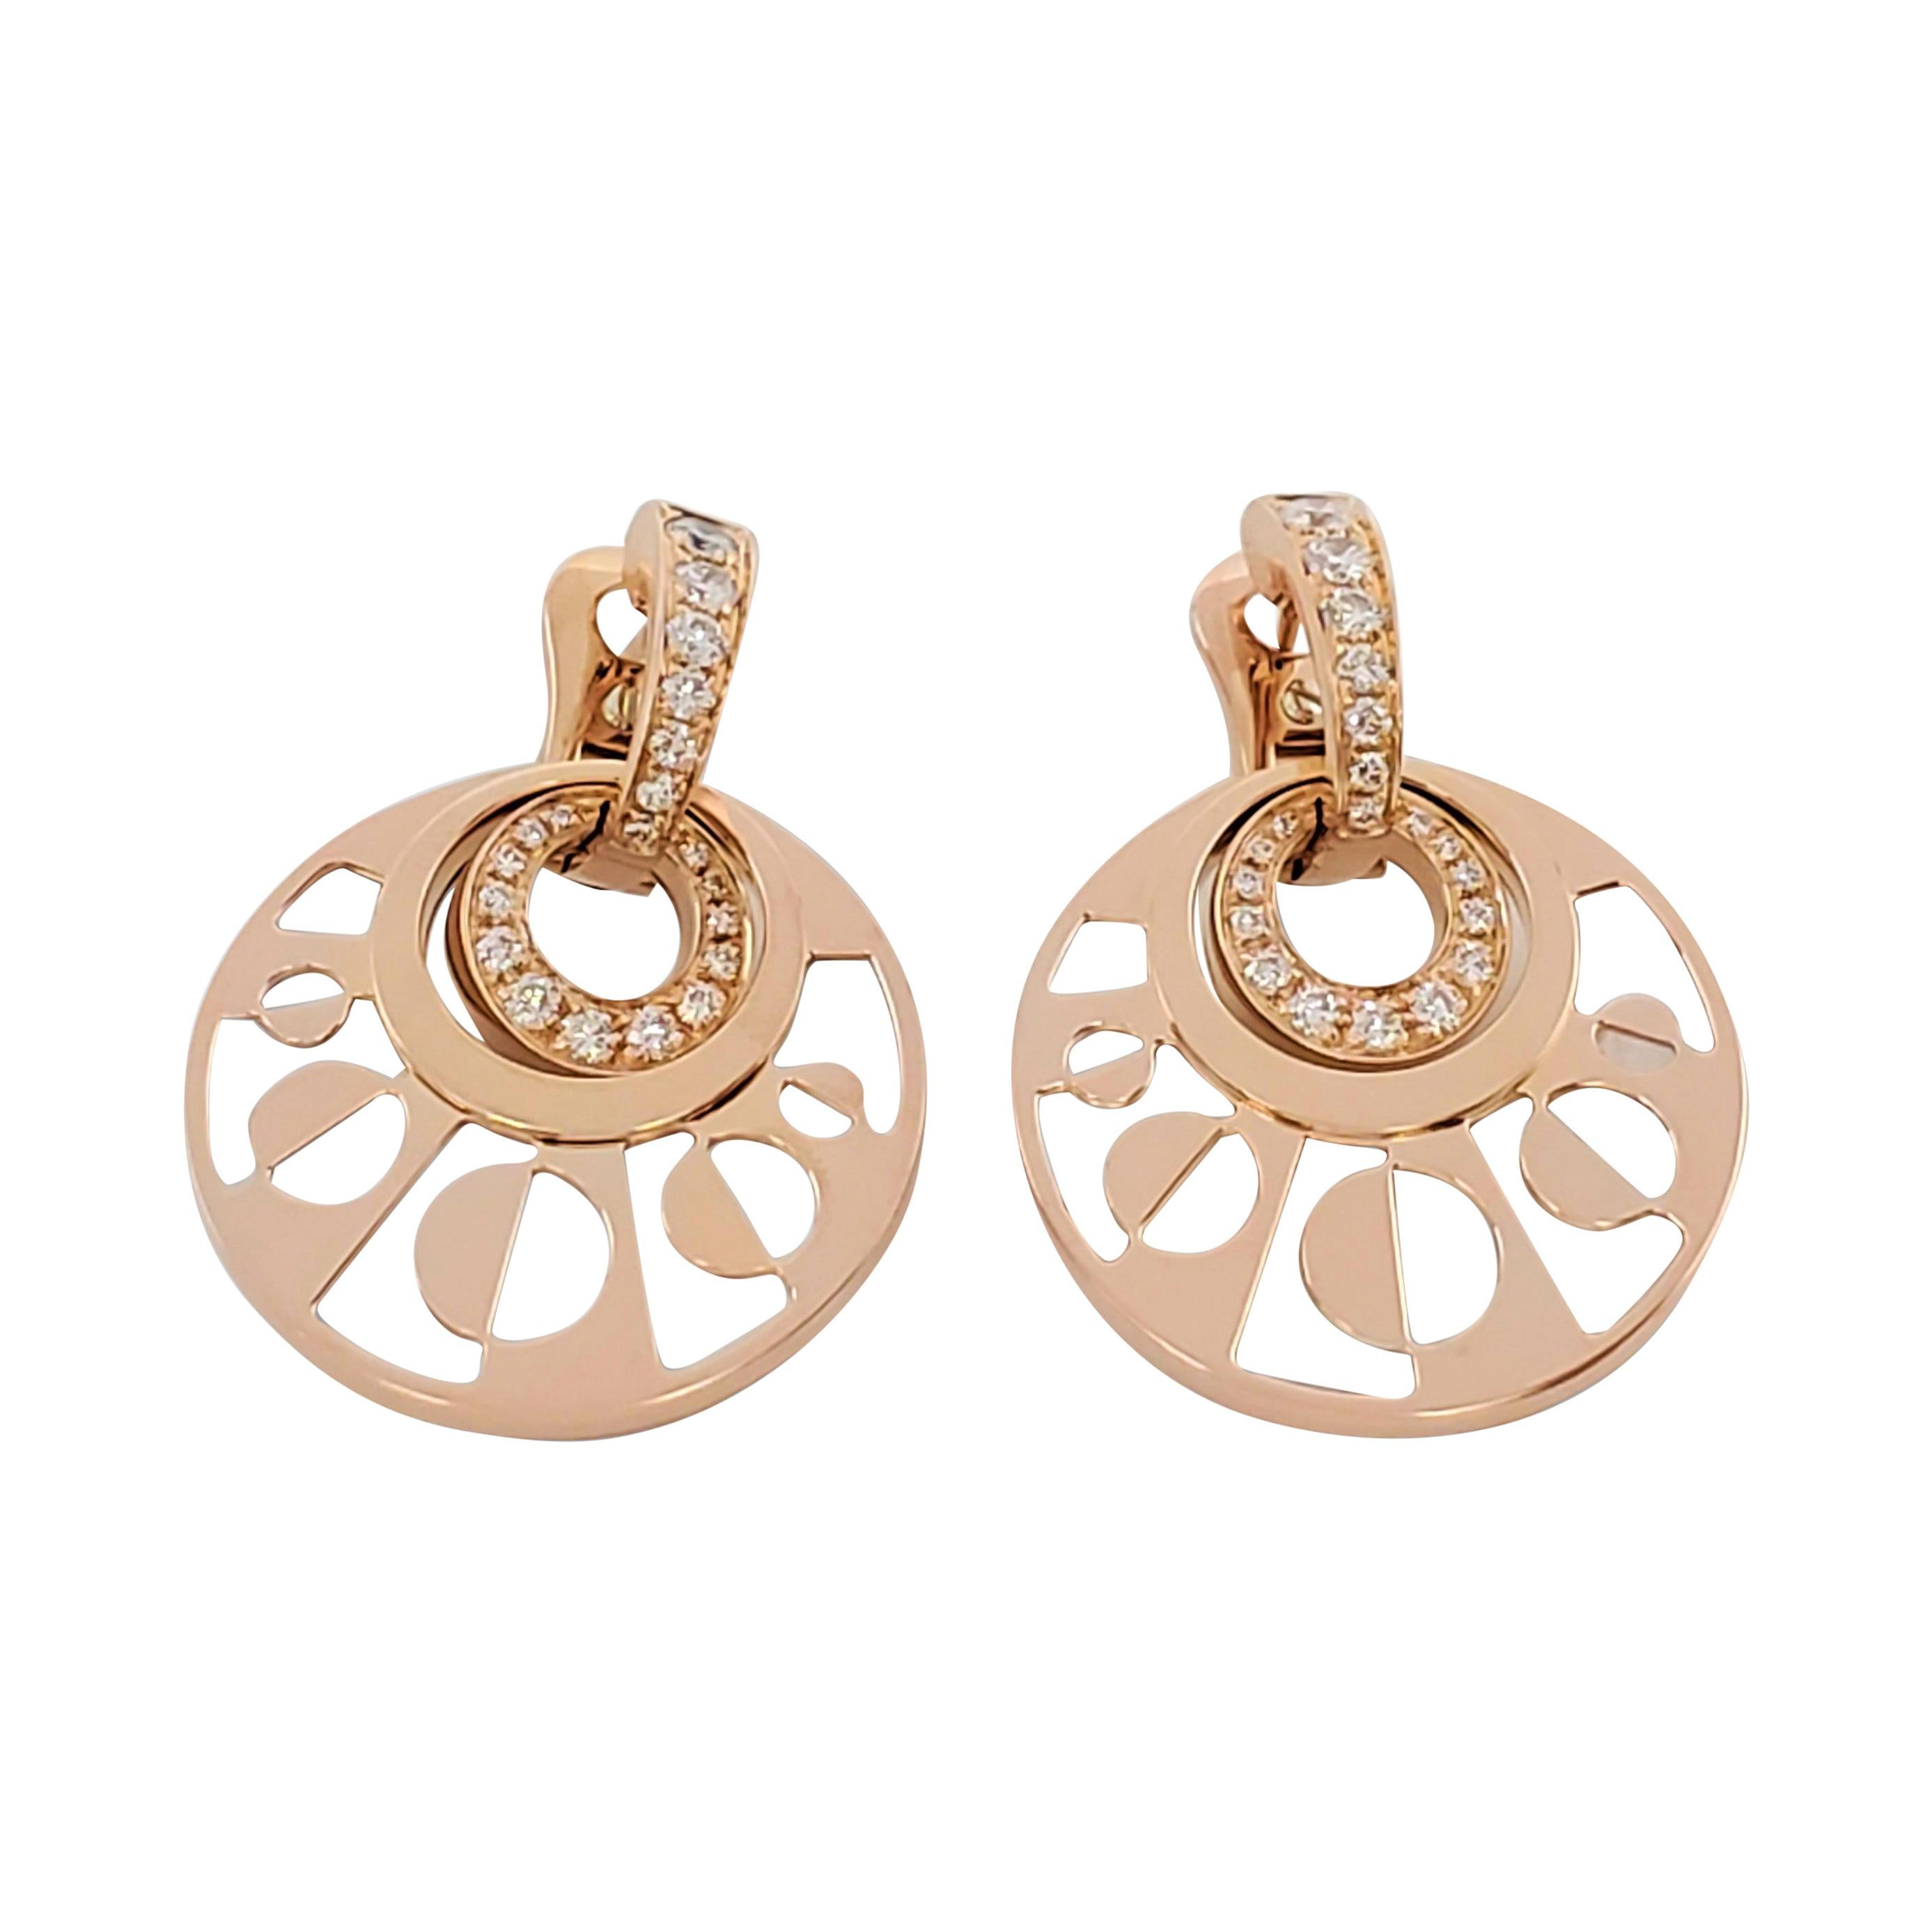 Bvlgari 'Intarsio' Rose Gold Mother-of-Pearl and Diamond Pendant Earrings